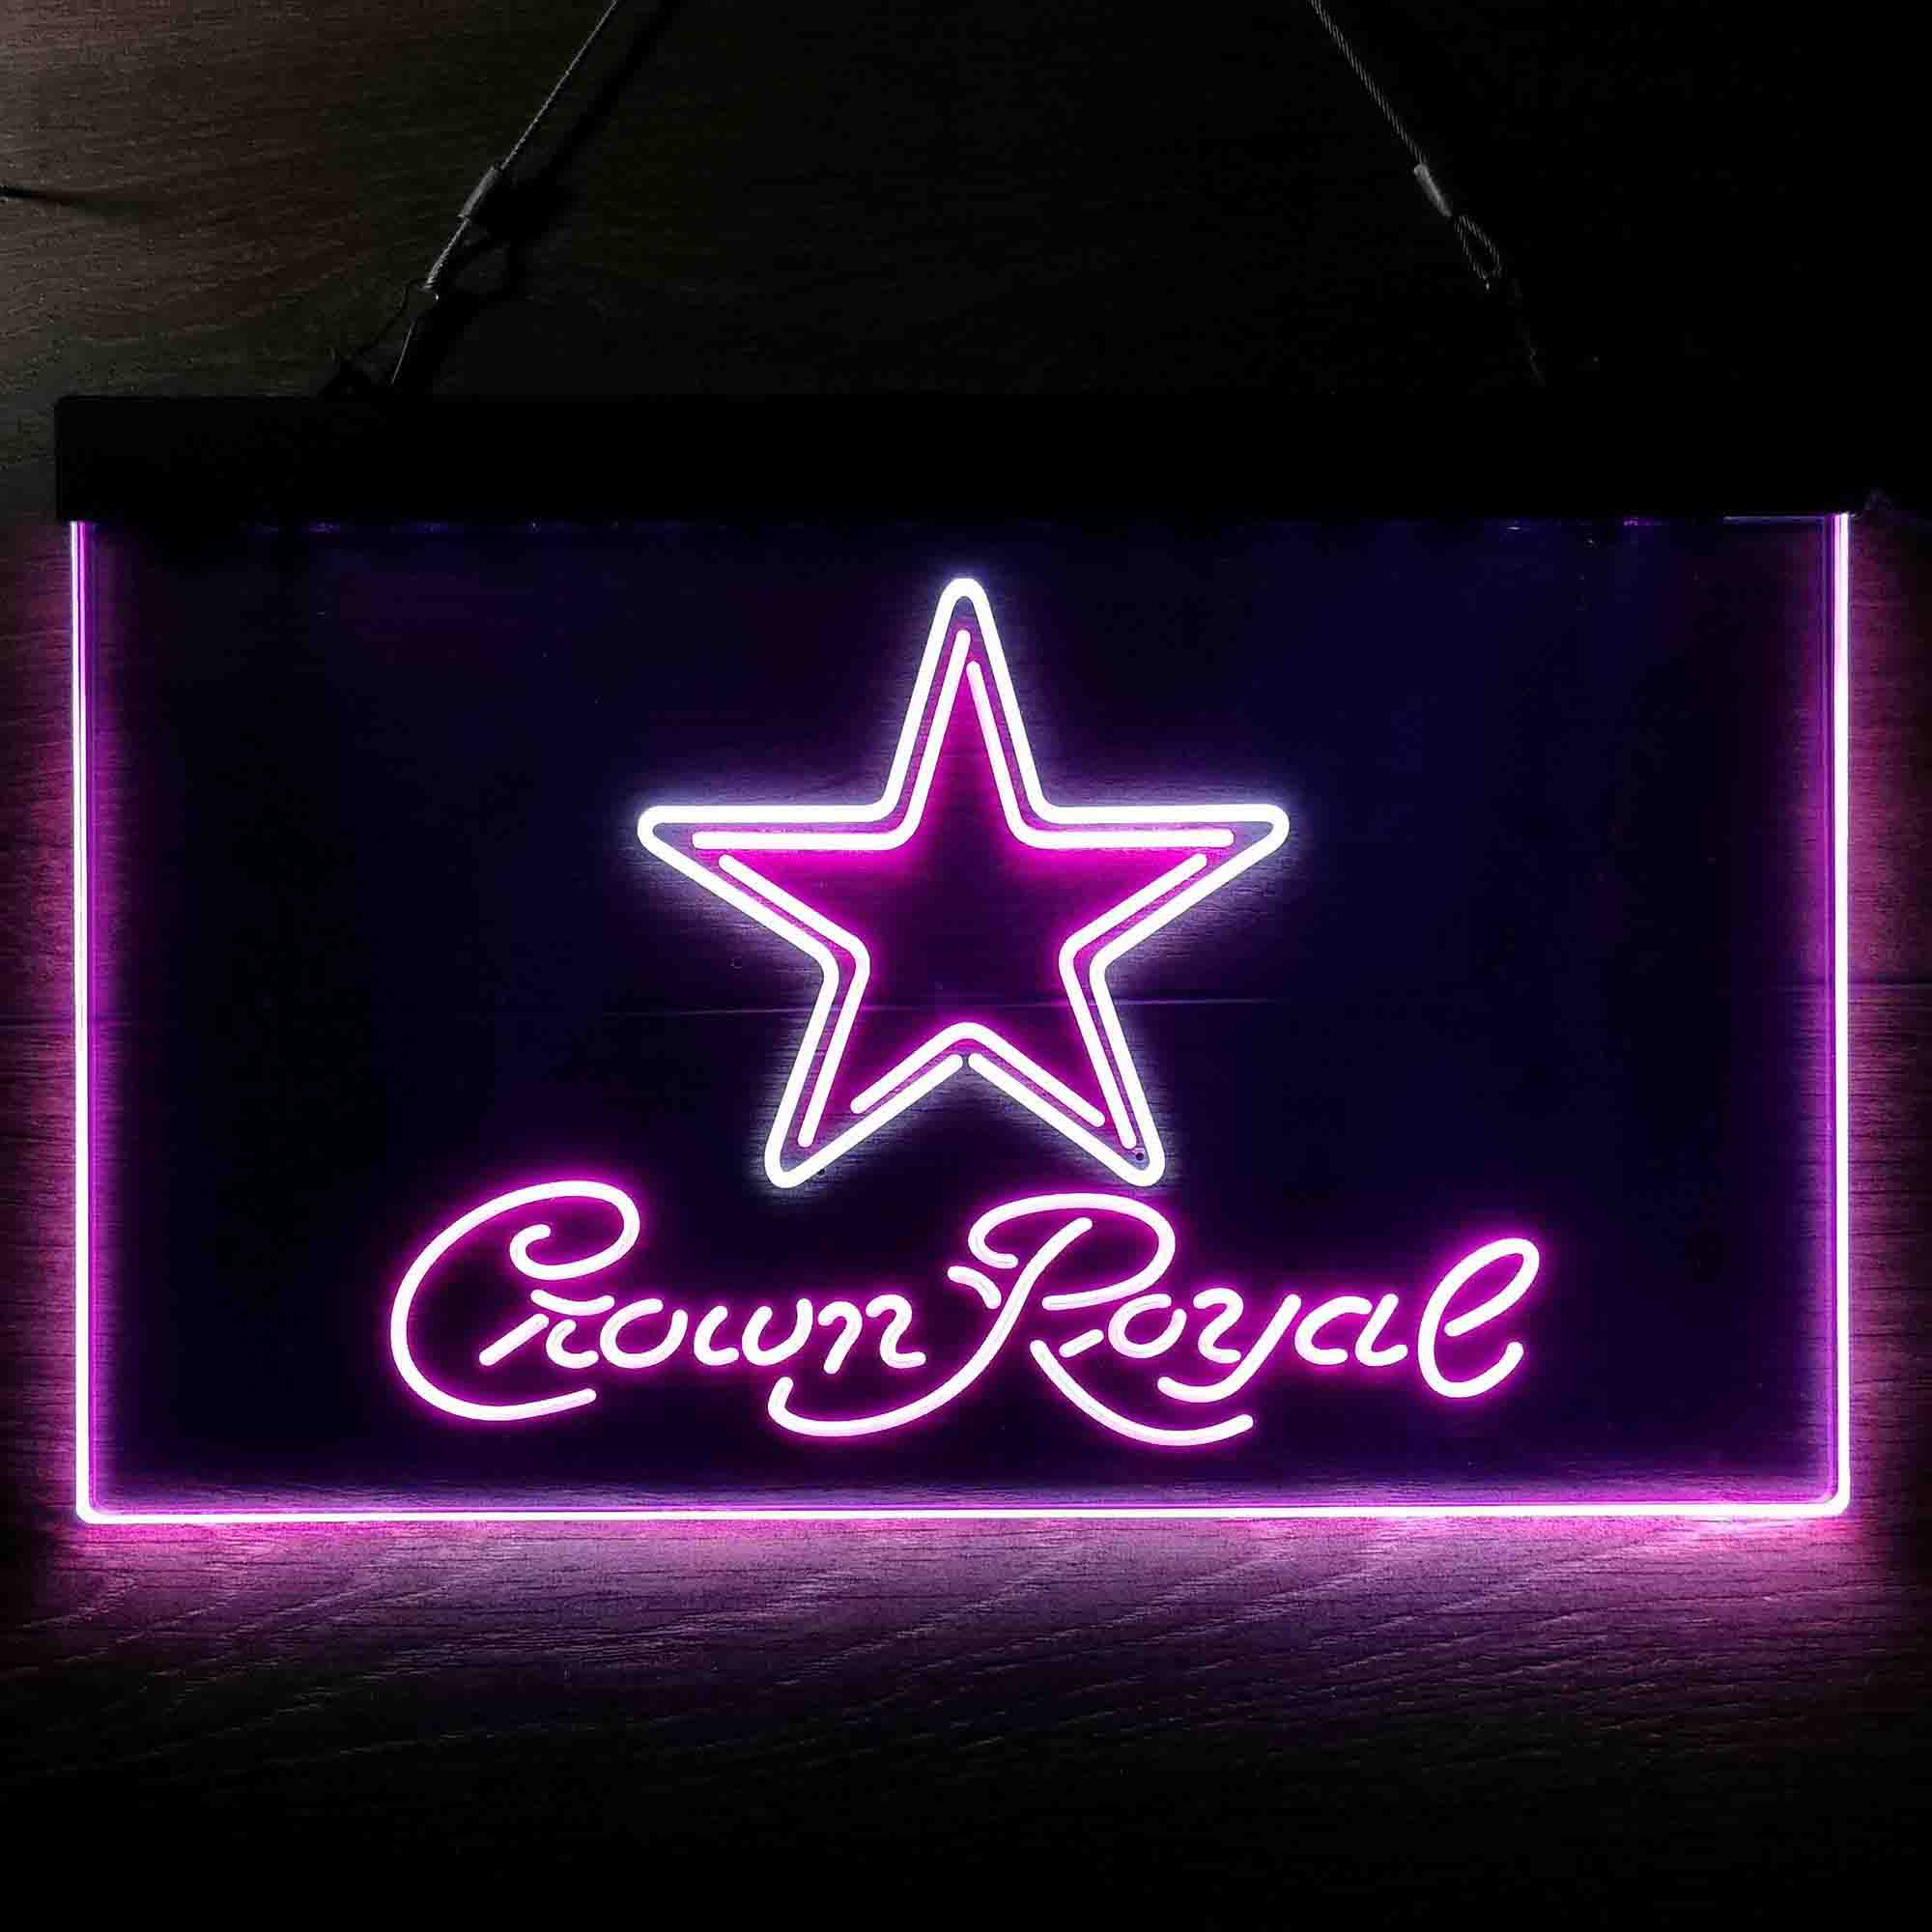 Dallas Cowboys Crown Royal Neon-Like LED Sign - ProLedSign